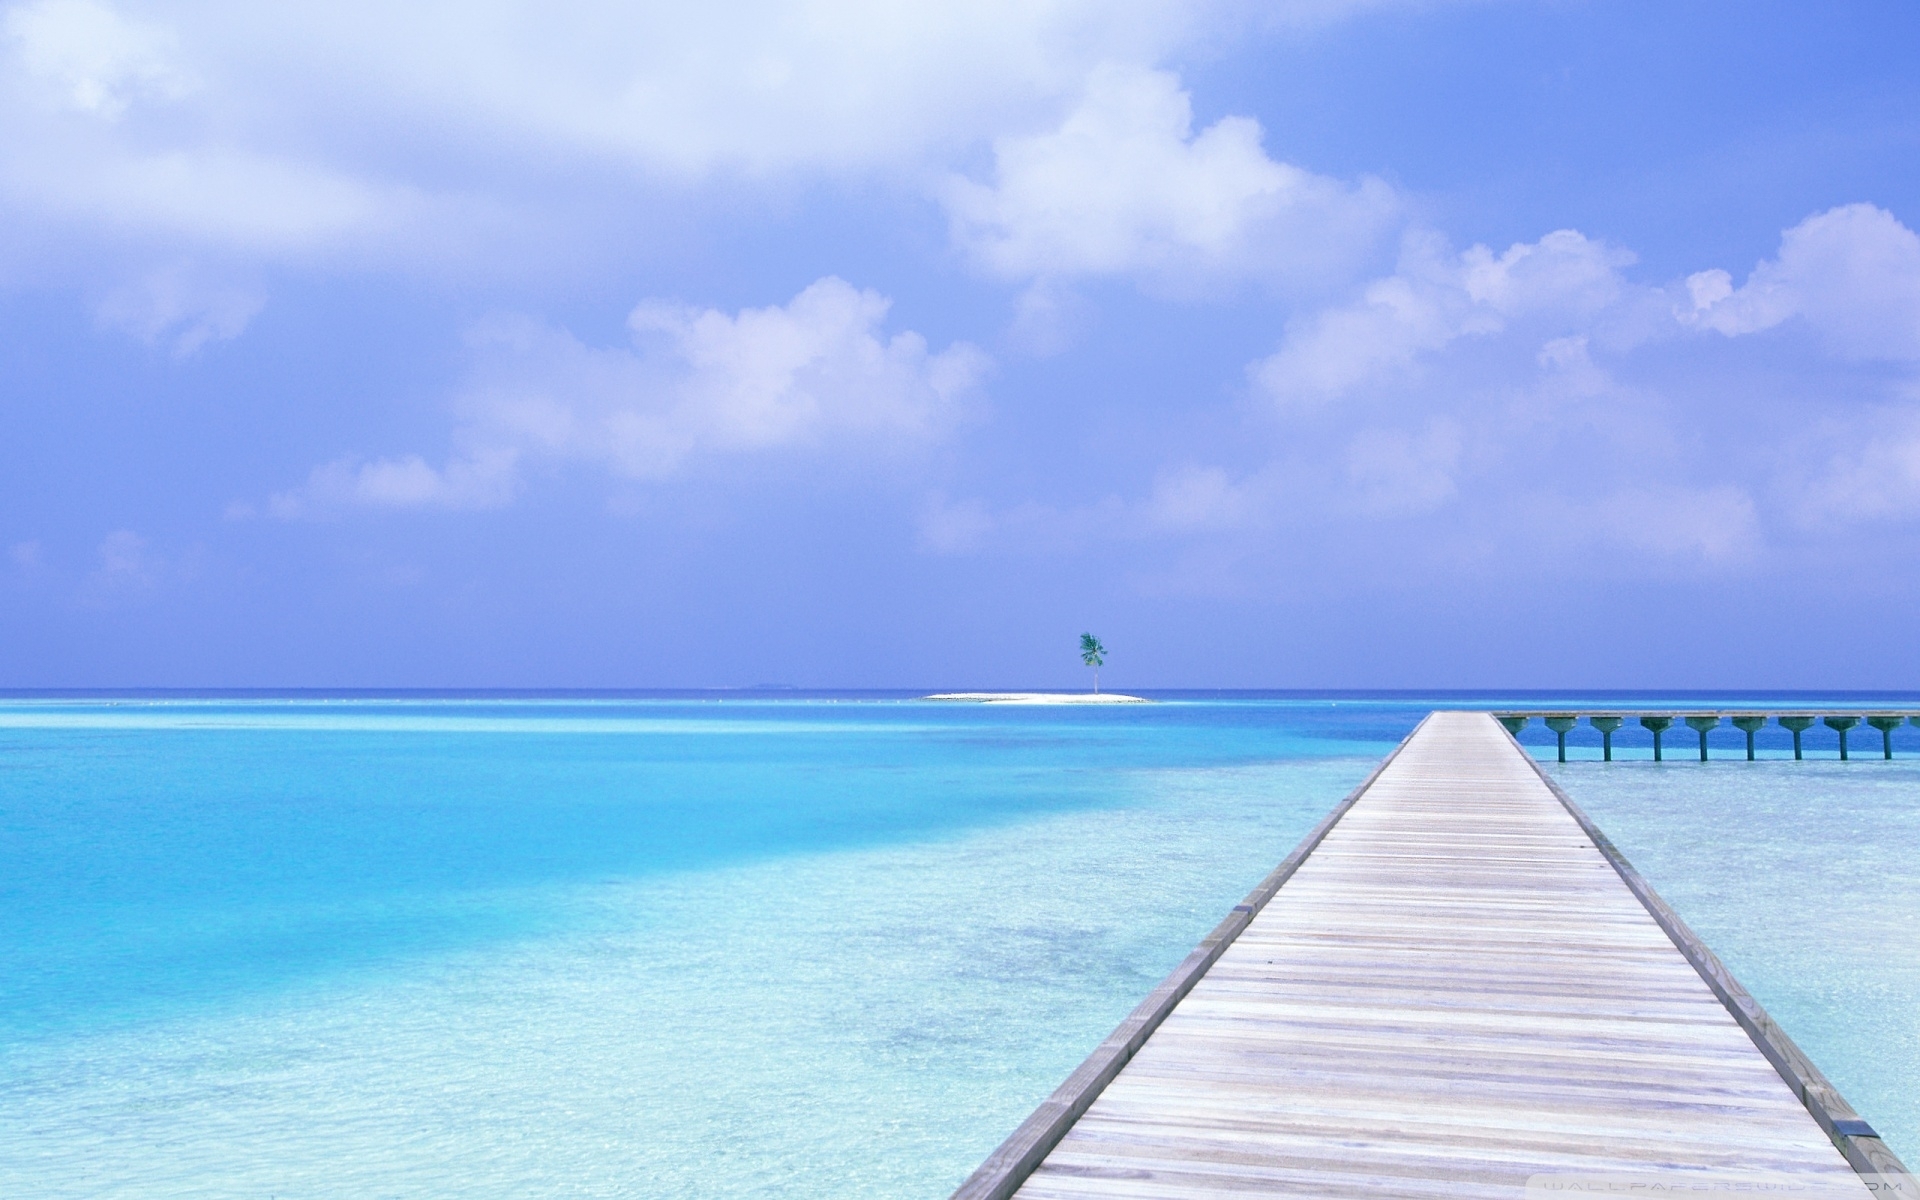 footbridge over blue ocean ❤ 4k hd desktop wallpaper for 4k ultra